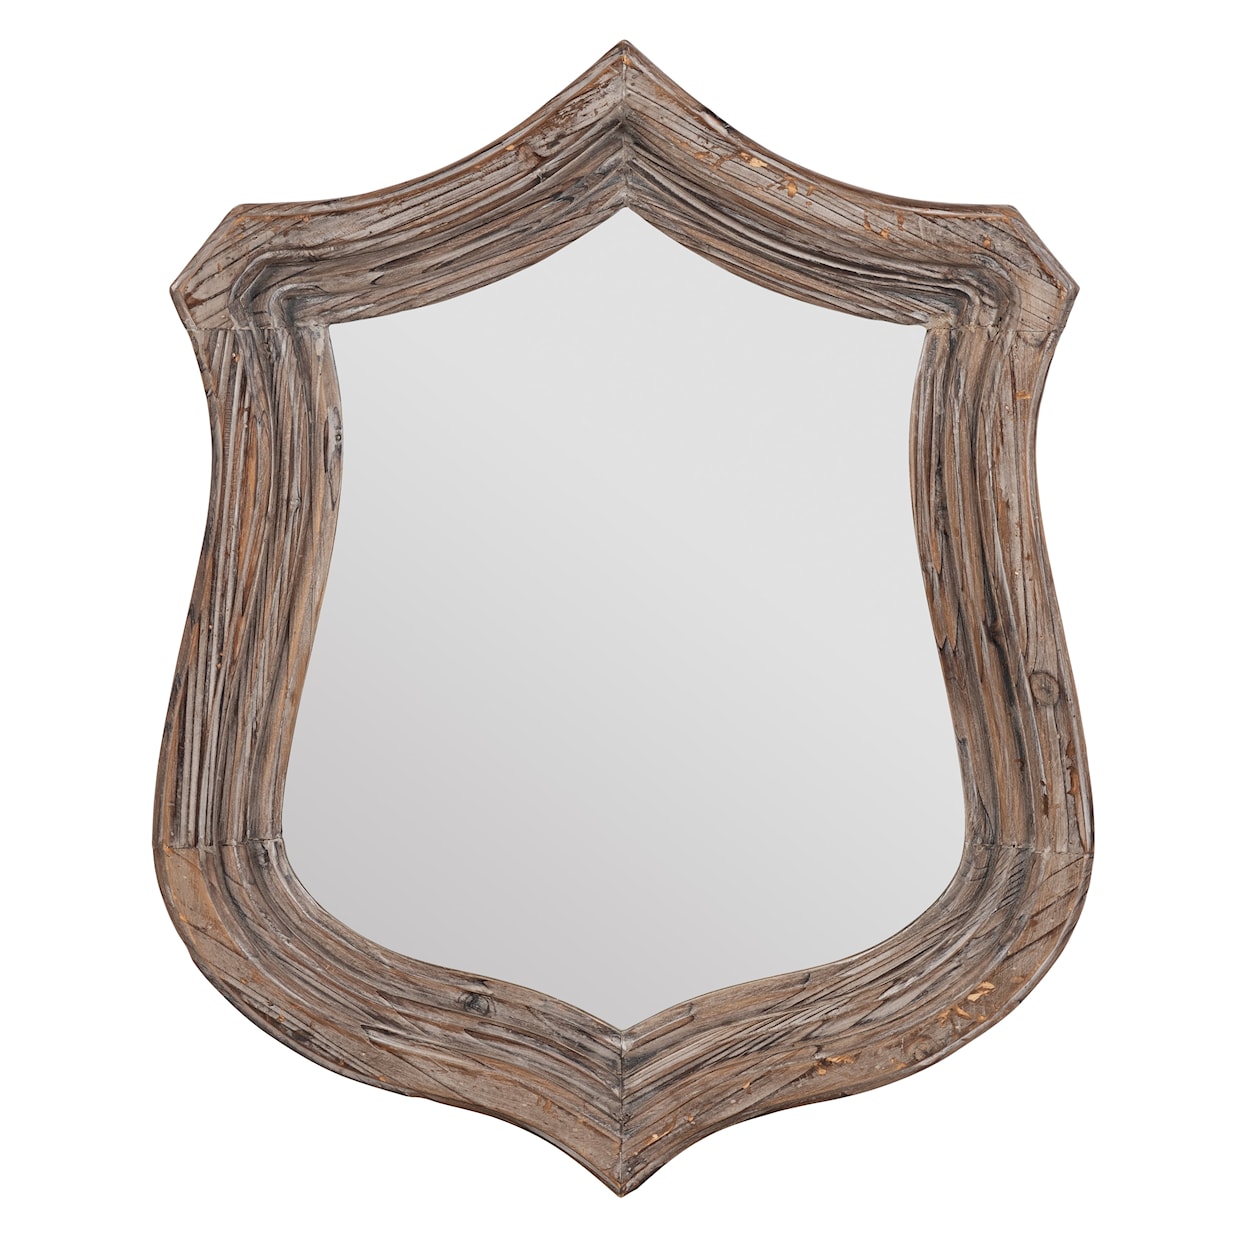 BOBO Intriguing Objects BOBO Intriguing Objects Distressed Fir Wood Trophy Mirror 4